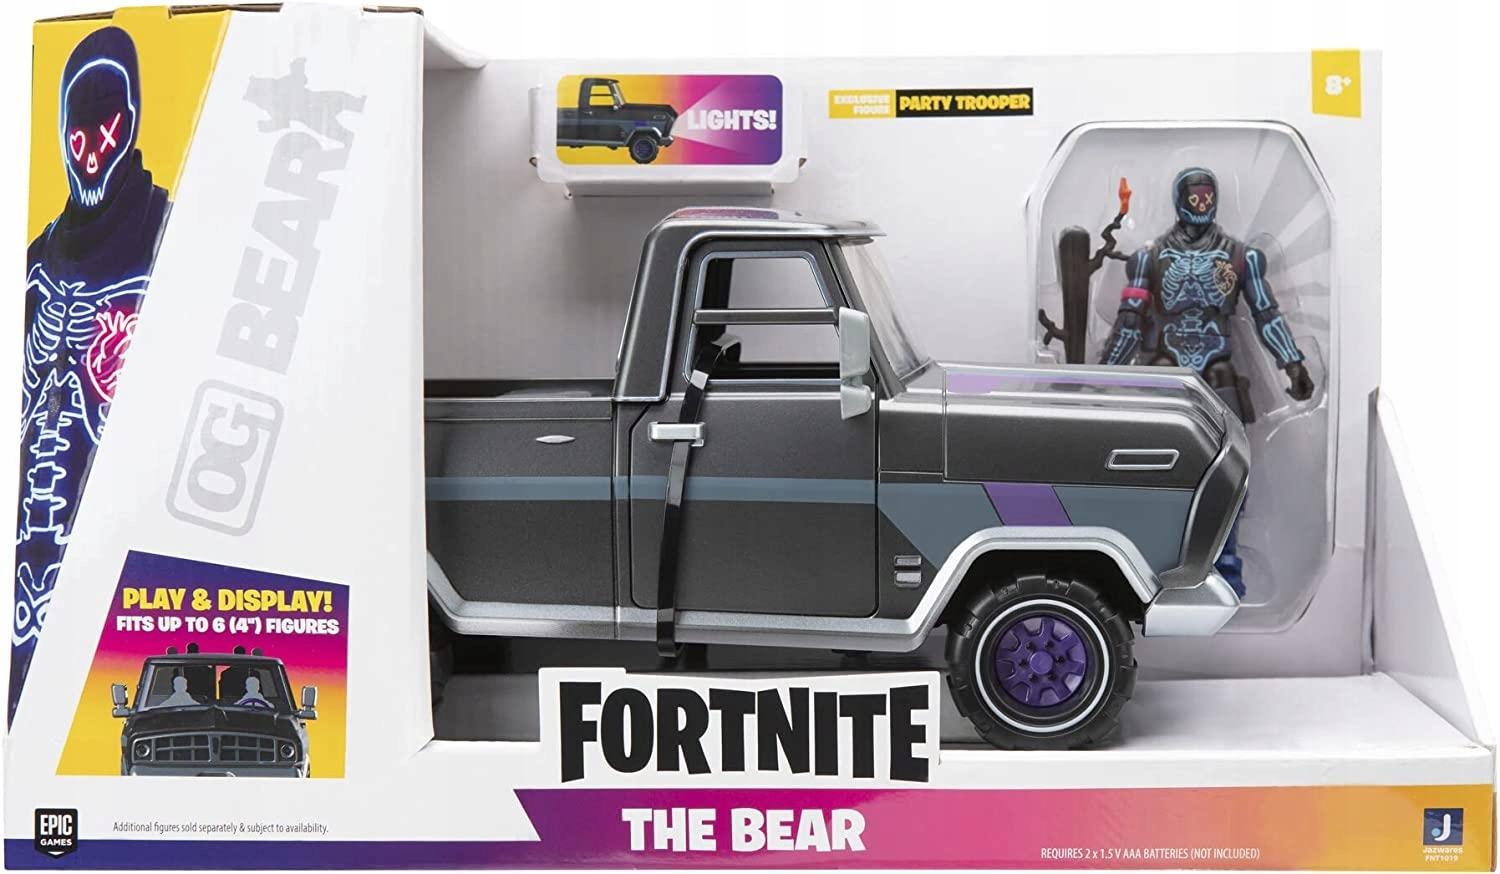 Figurka PARTY TROOPER pojazd fortnite the bear dla dziecka  1 Full Screen